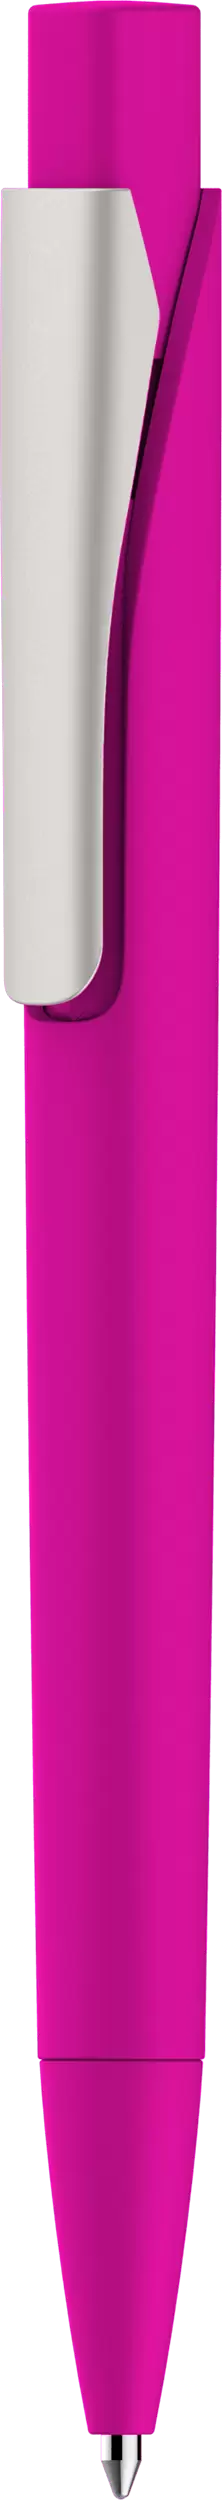 Ручка MASTER SOFT Розовая 1040-10